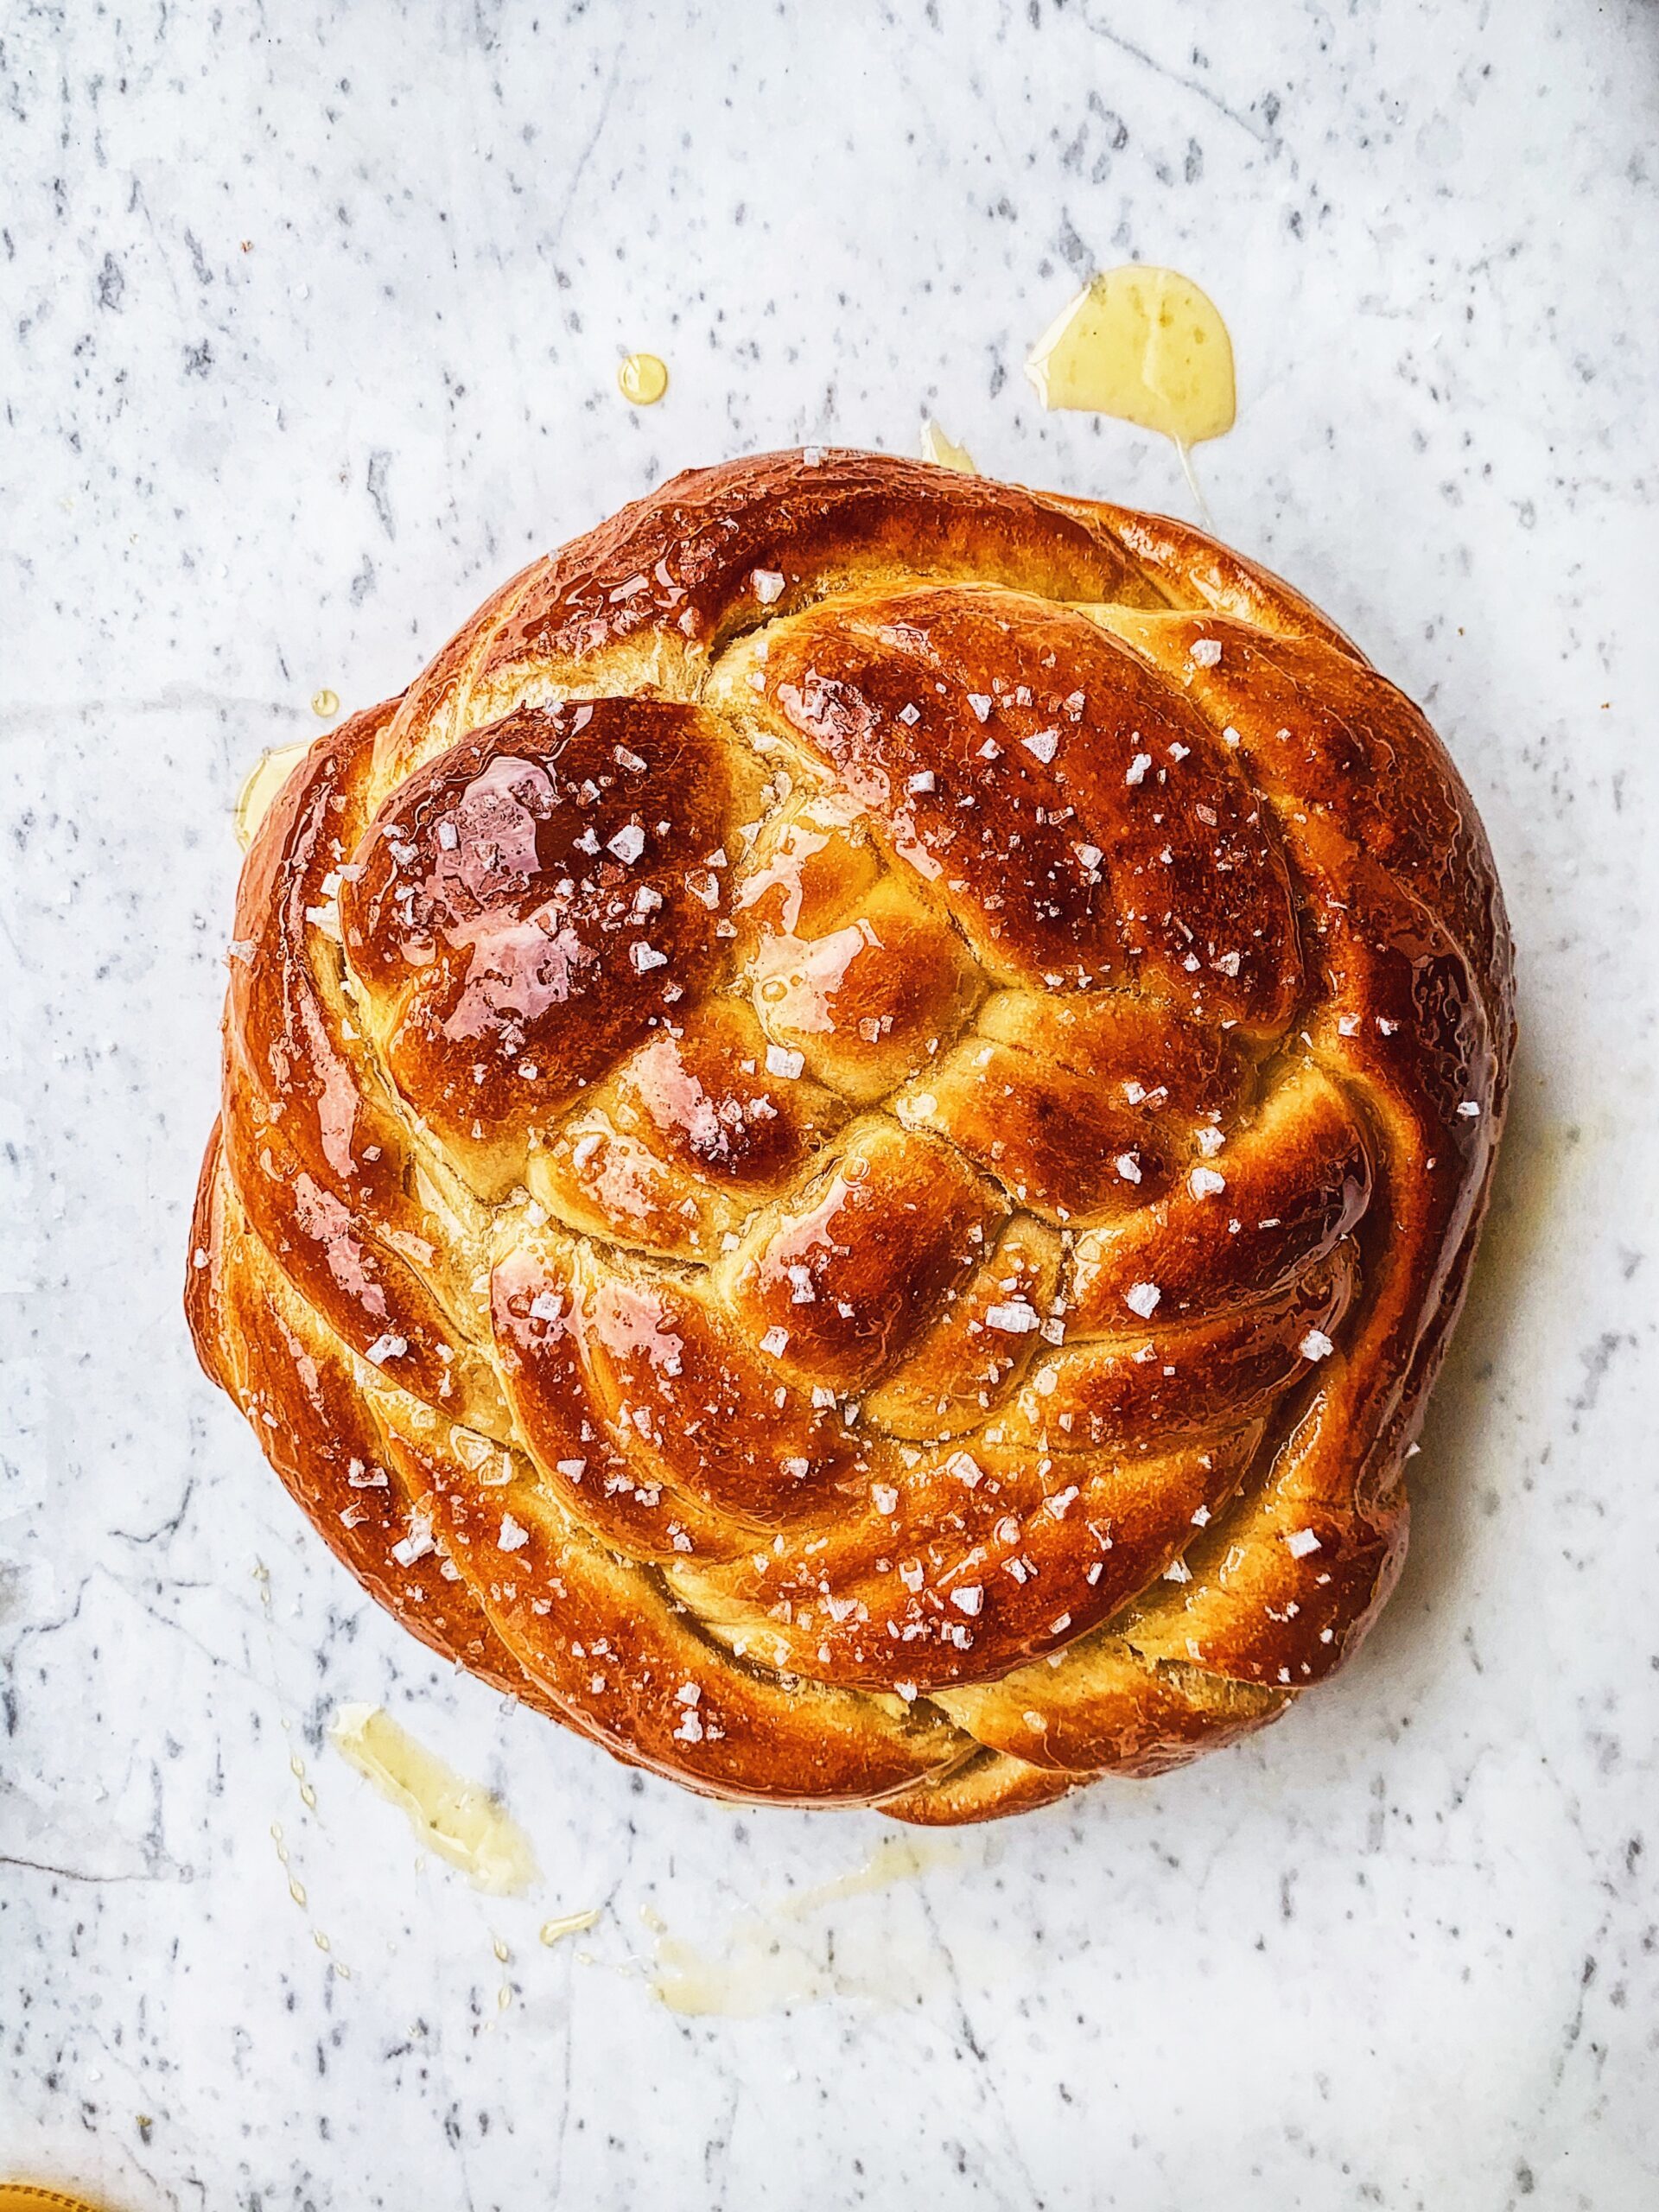 Honey Challah Bread by Carolina gelen|@carolinagelen